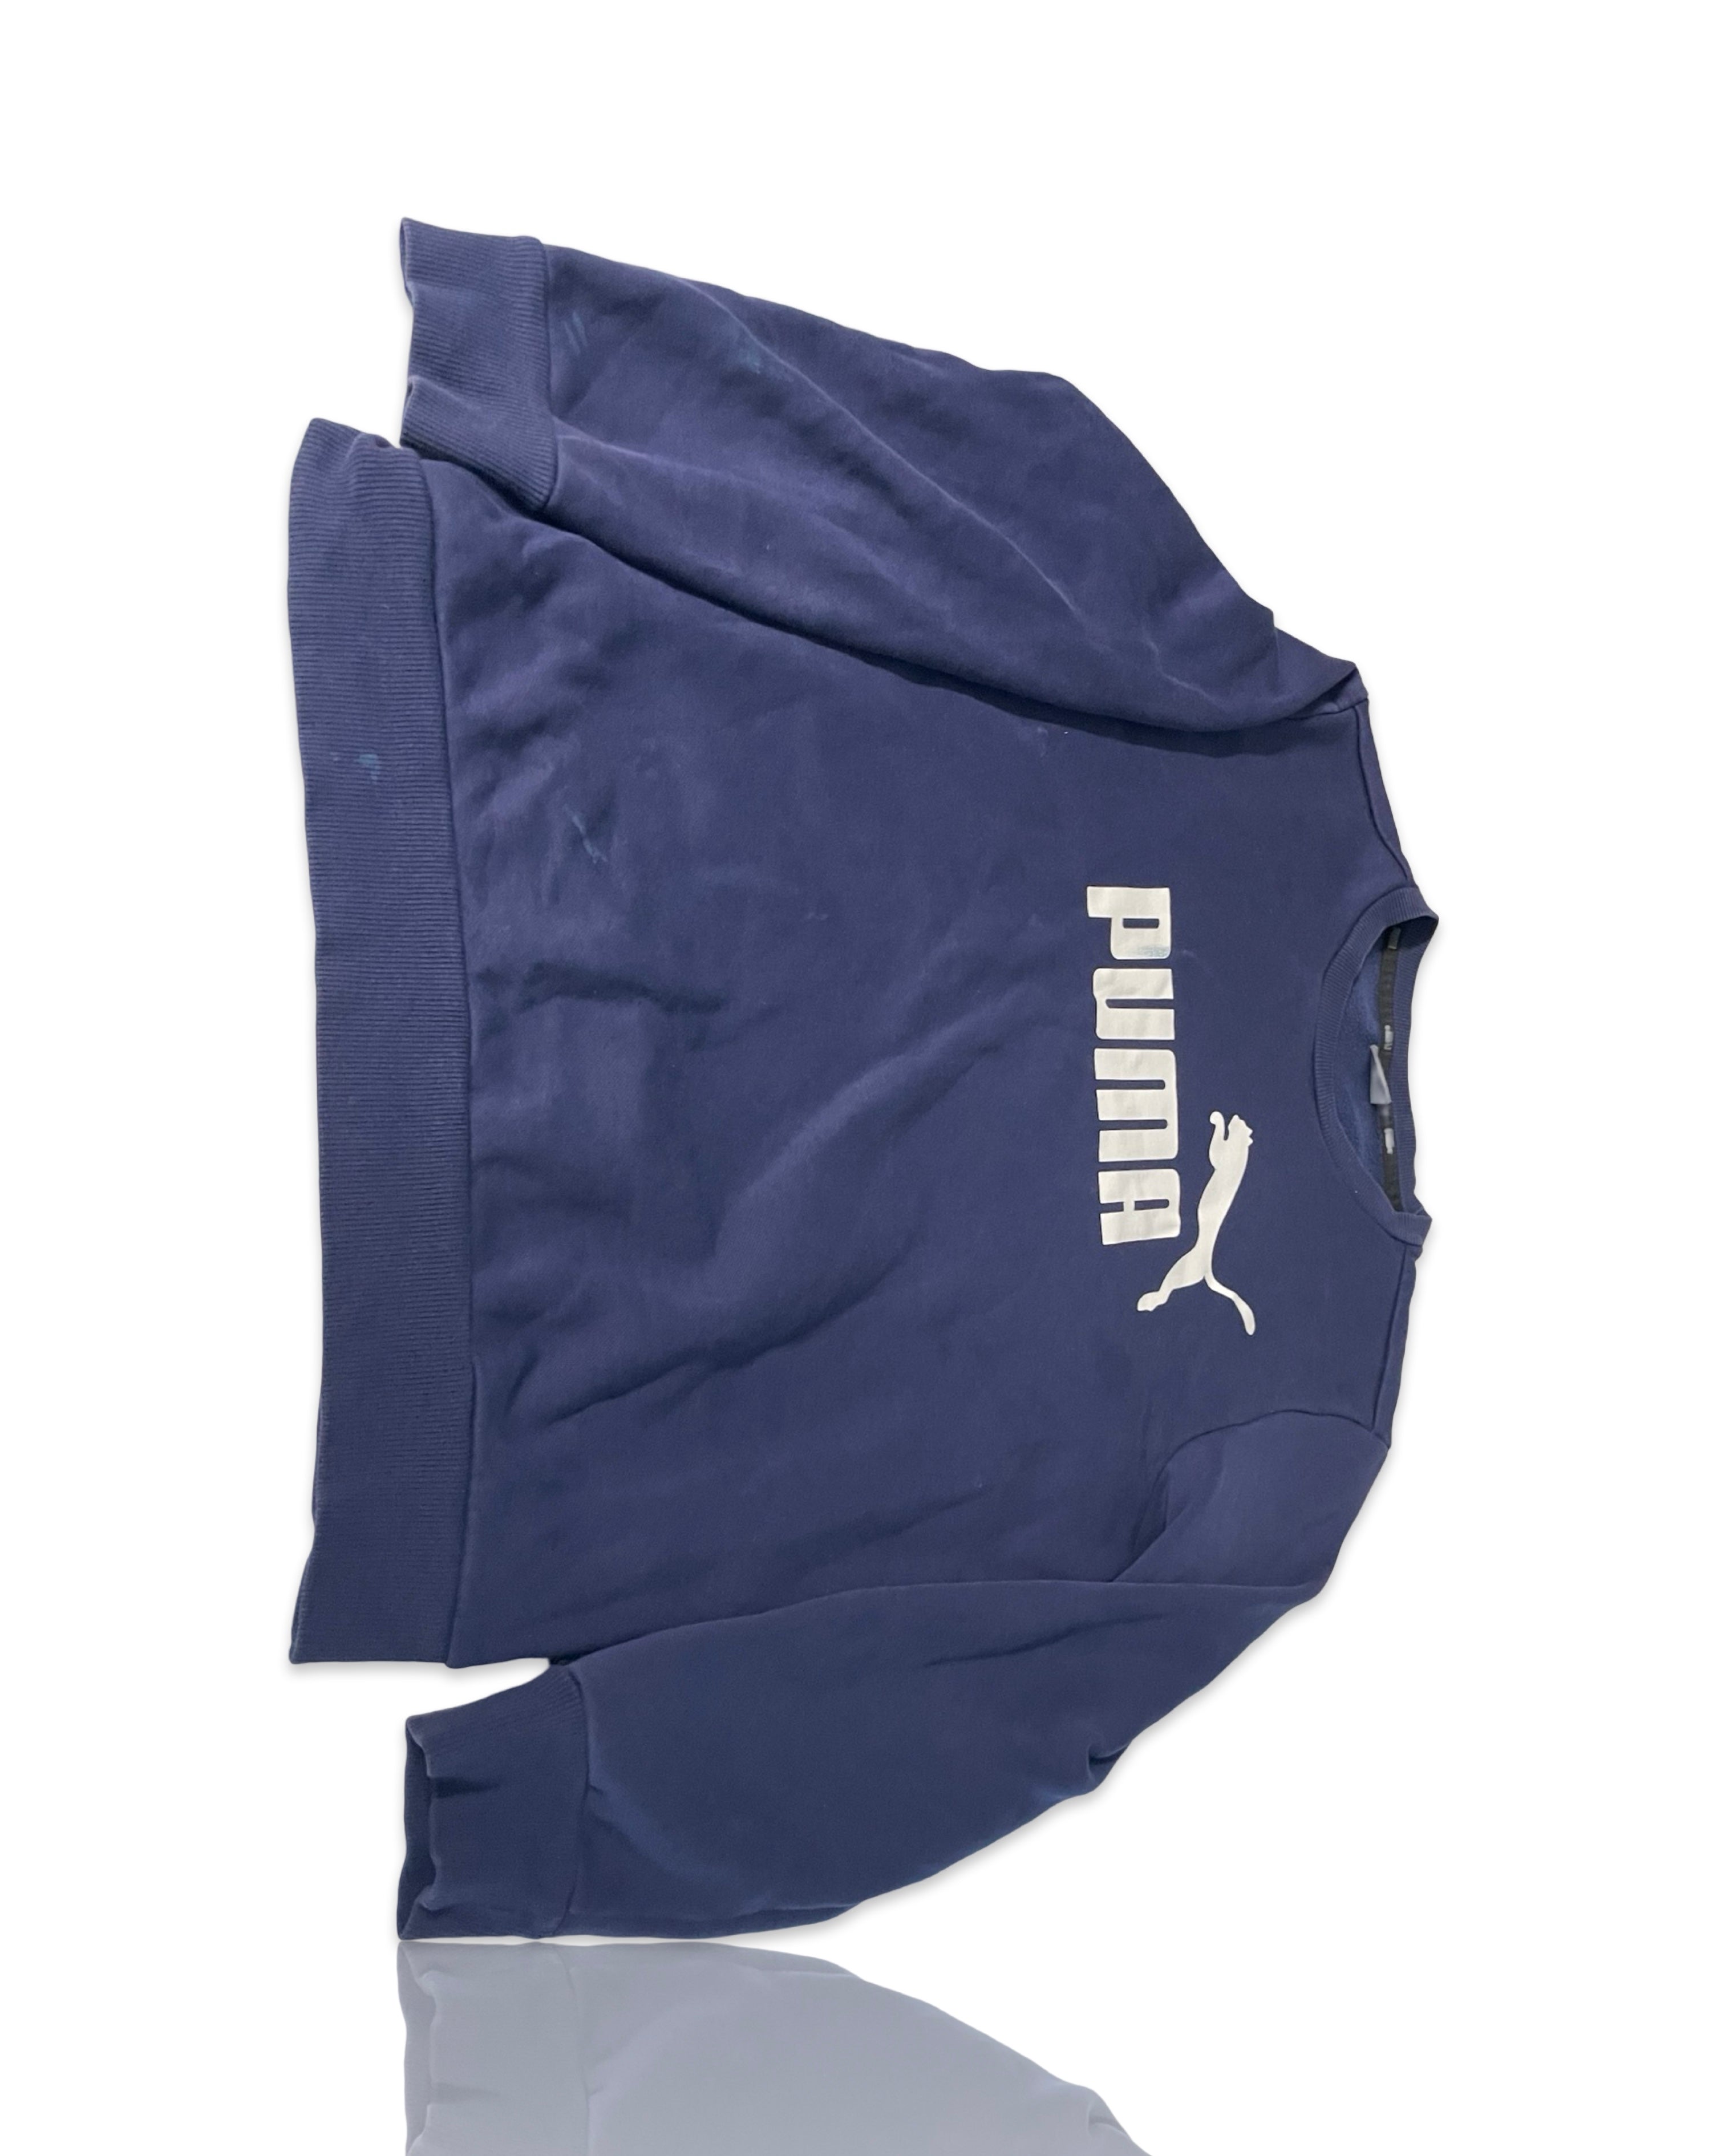 Rare Vintage Puma Sweatshirt / Blue Navy Jumper / Puma Sweater / Pullover Crewneck / Sportswear / Big Logo Printed / Small Fit Size|SKU 4244